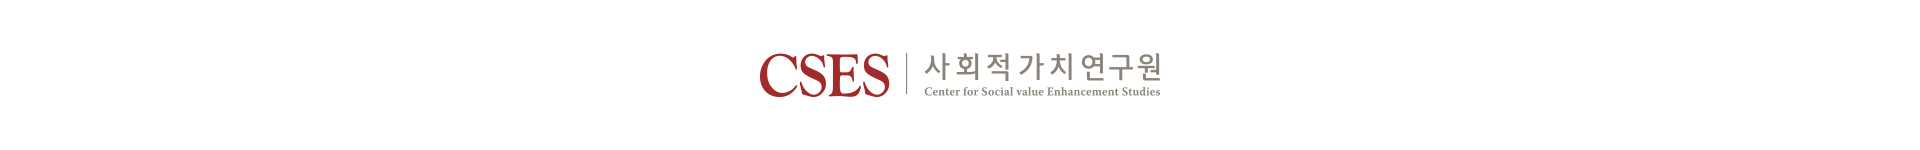 CSES 사회적가치연구원